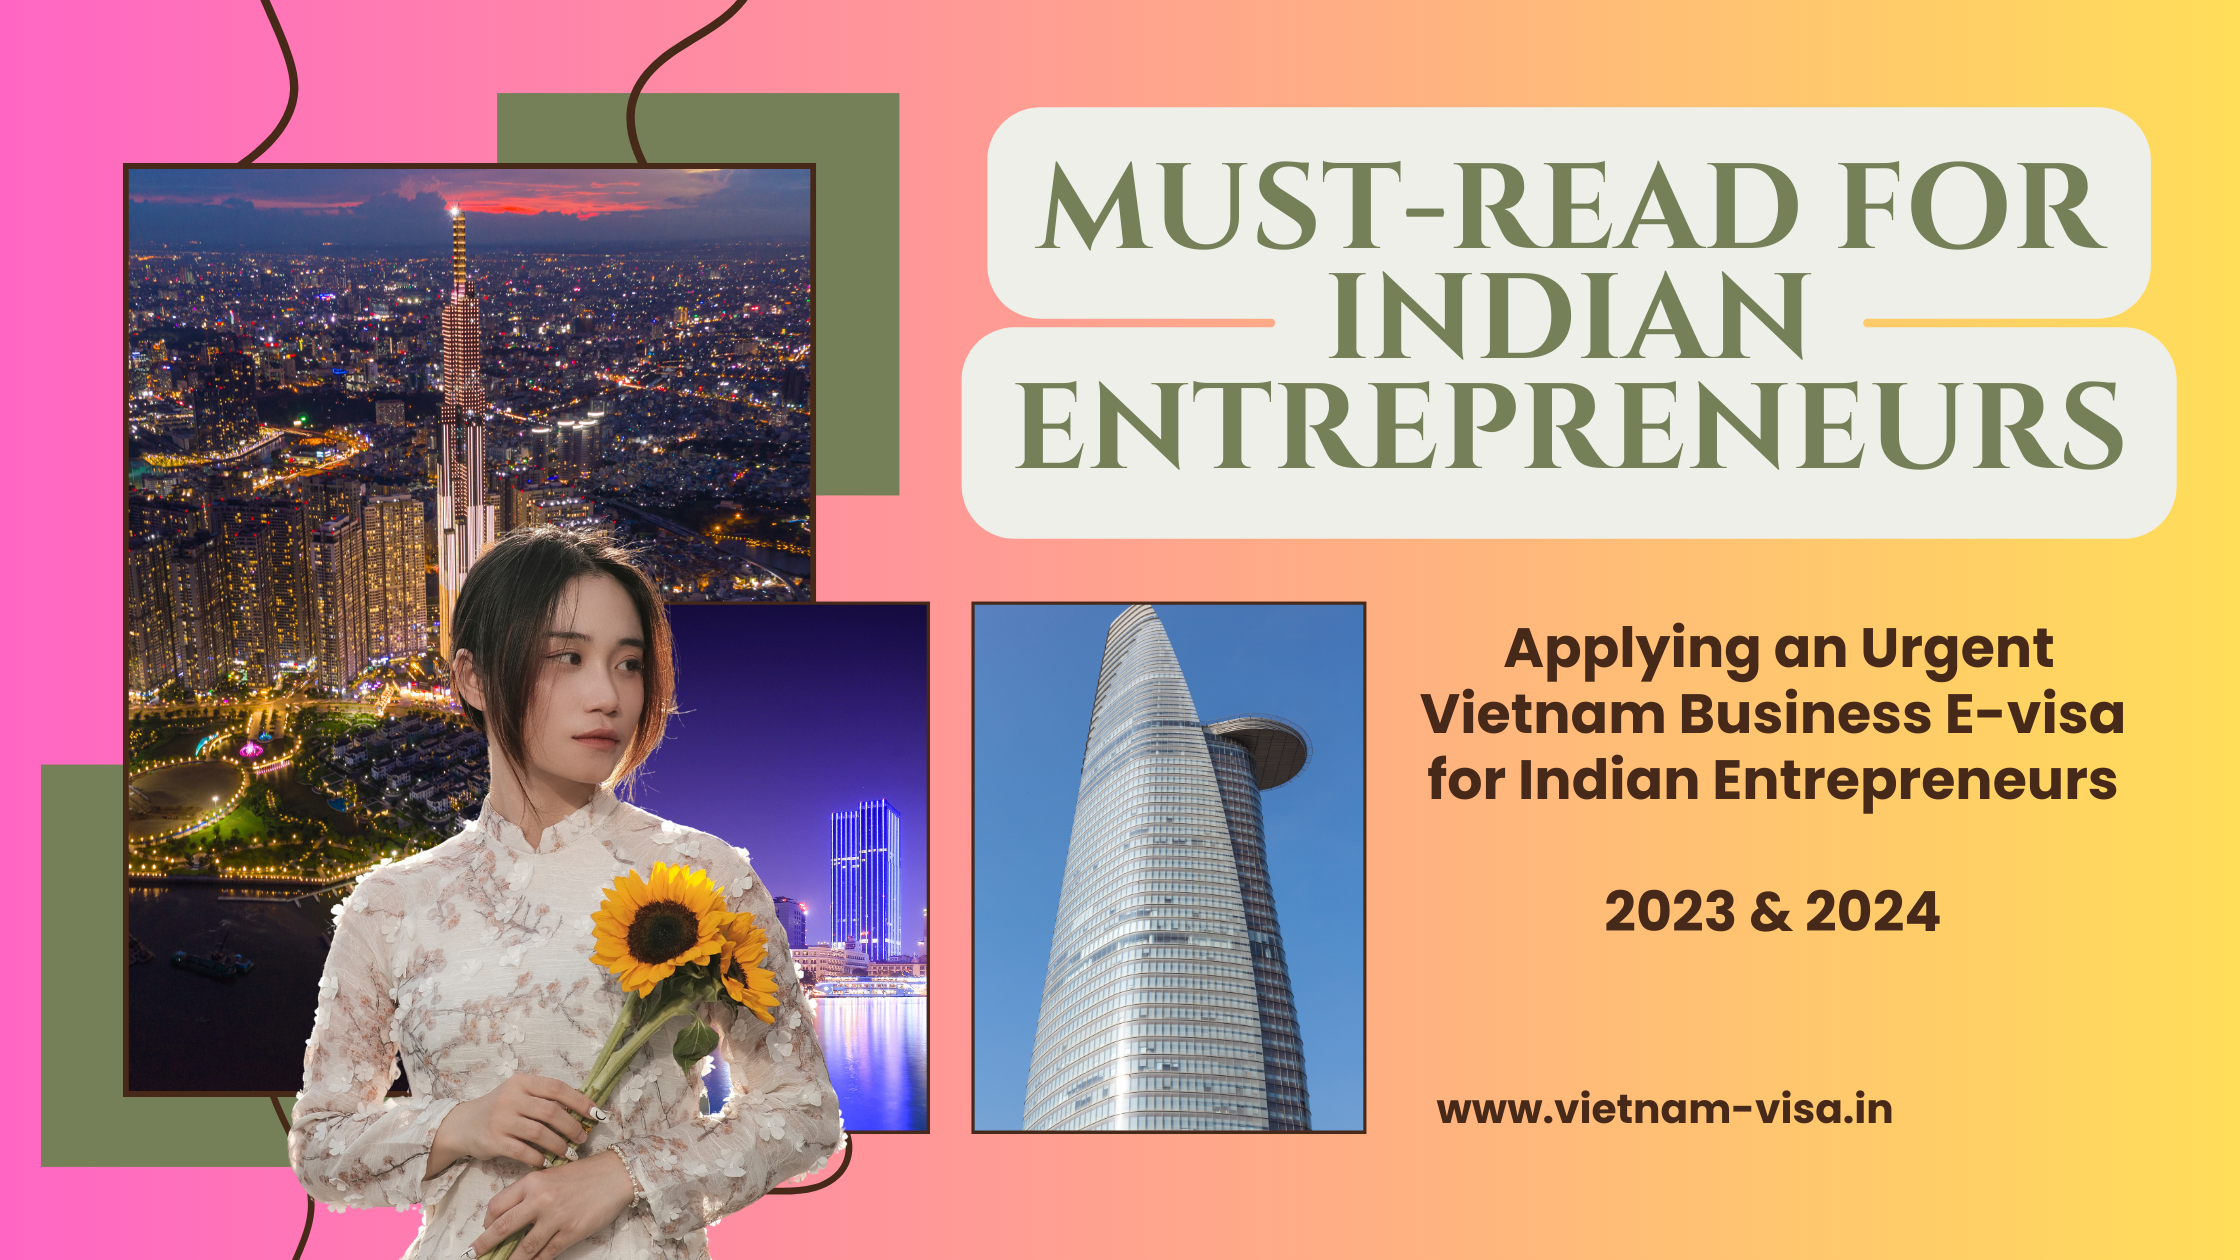 Applying-for-an-Urgent-Vietnam-Business-E-visa-A-Must-Read-for-Indian-Entrepreneurs-Updated-2023-2024